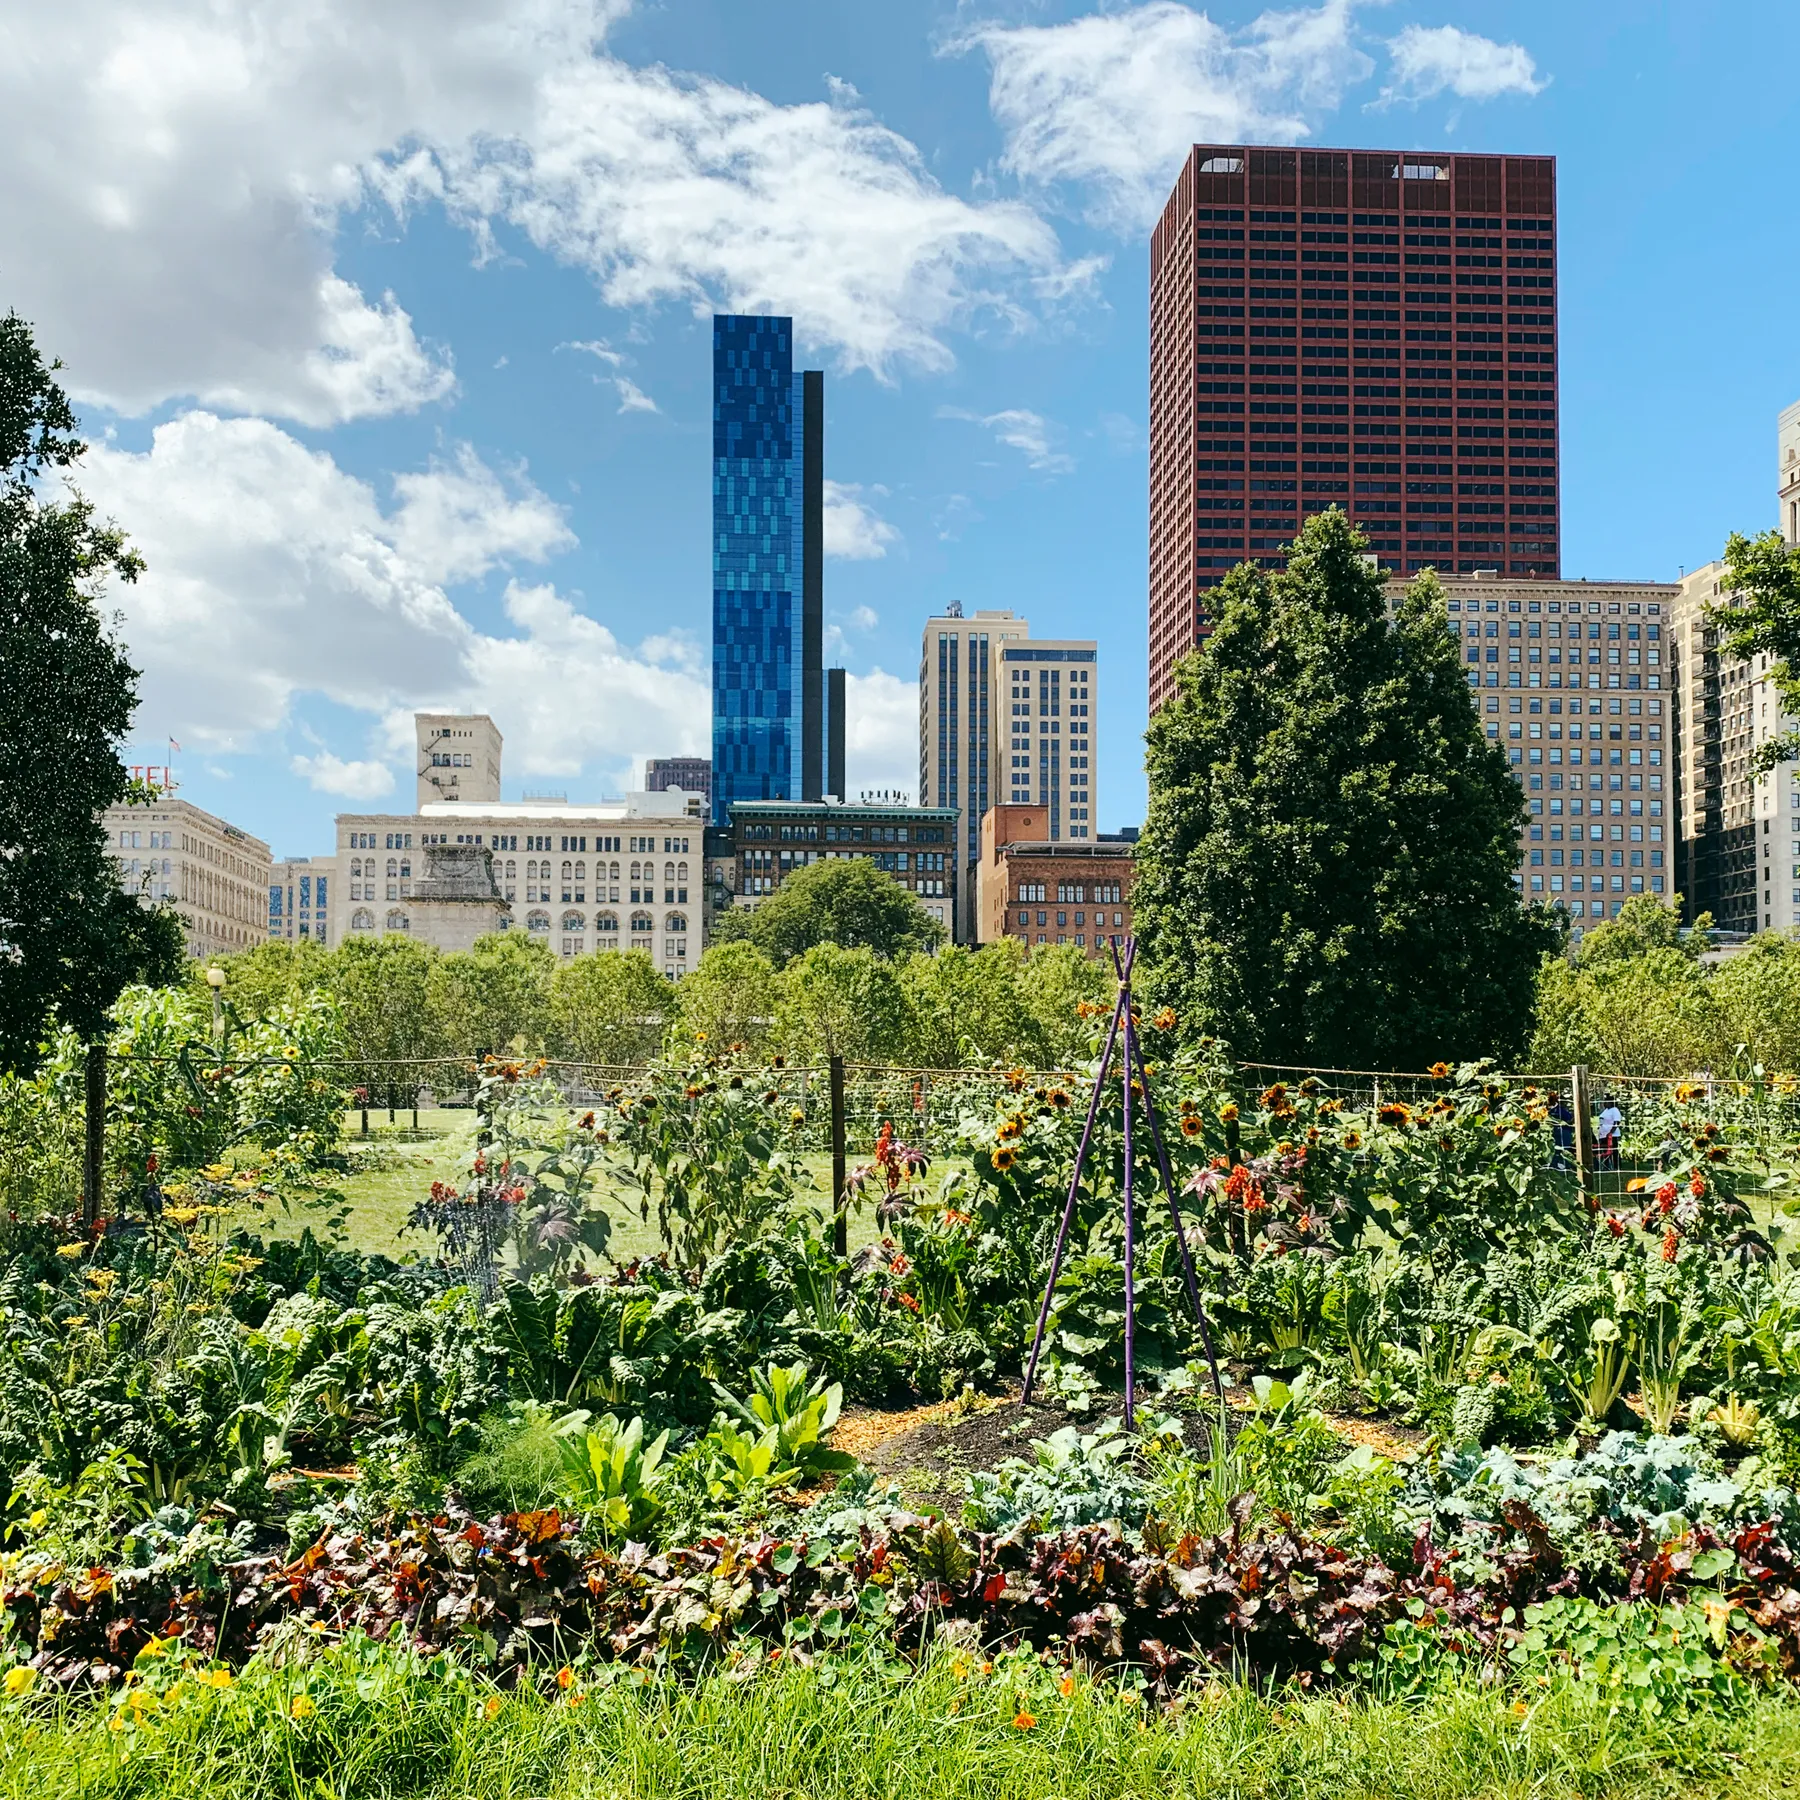 Urban farming transforms cities